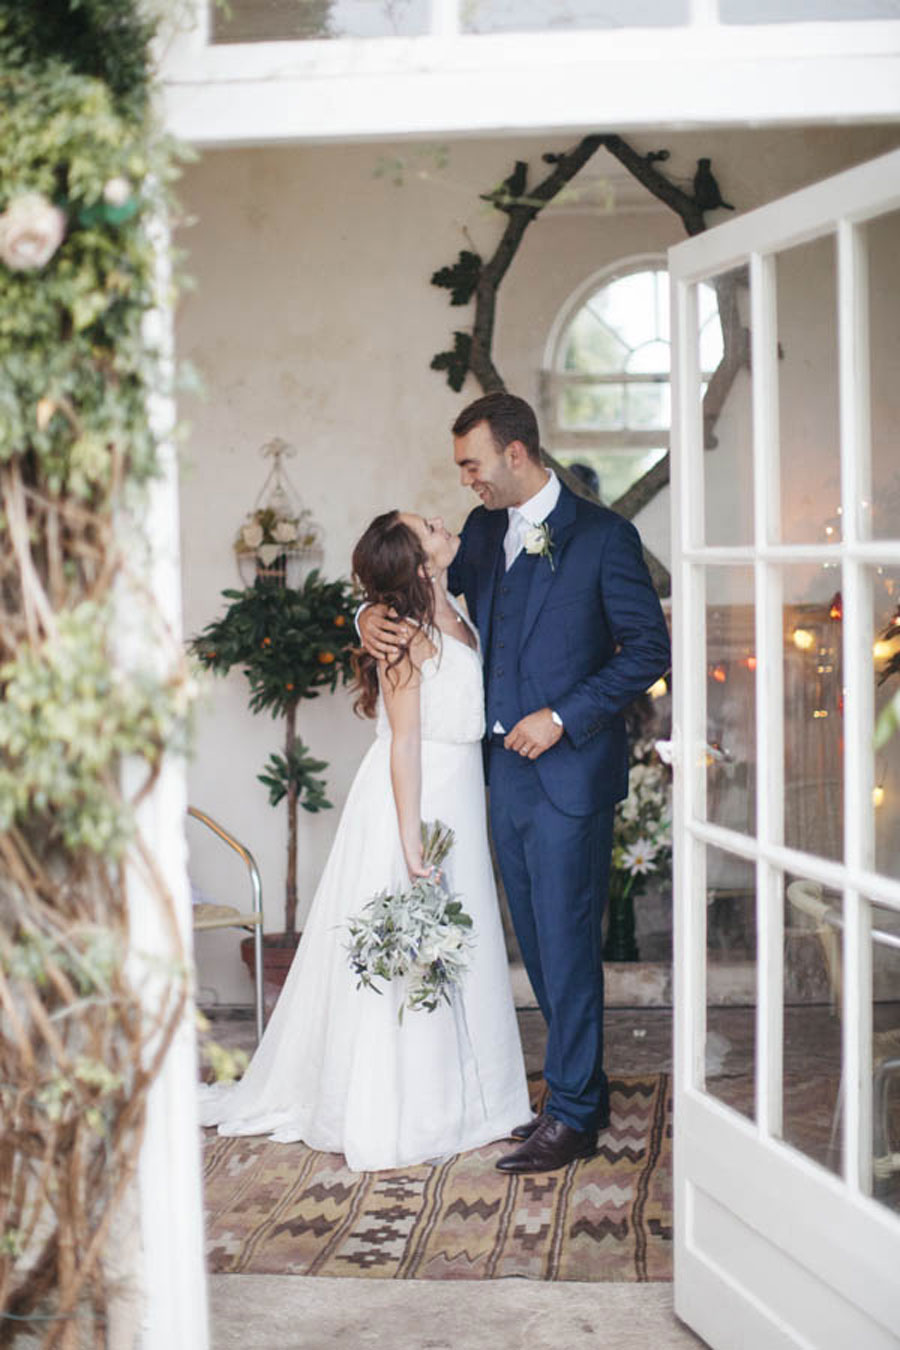 https://www.wantthatwedding.co.uk/wp-content/uploads/2016/11/Lovely-Lavender-An-Elegant-Rustic-French-INspired-Wedding222.jpg